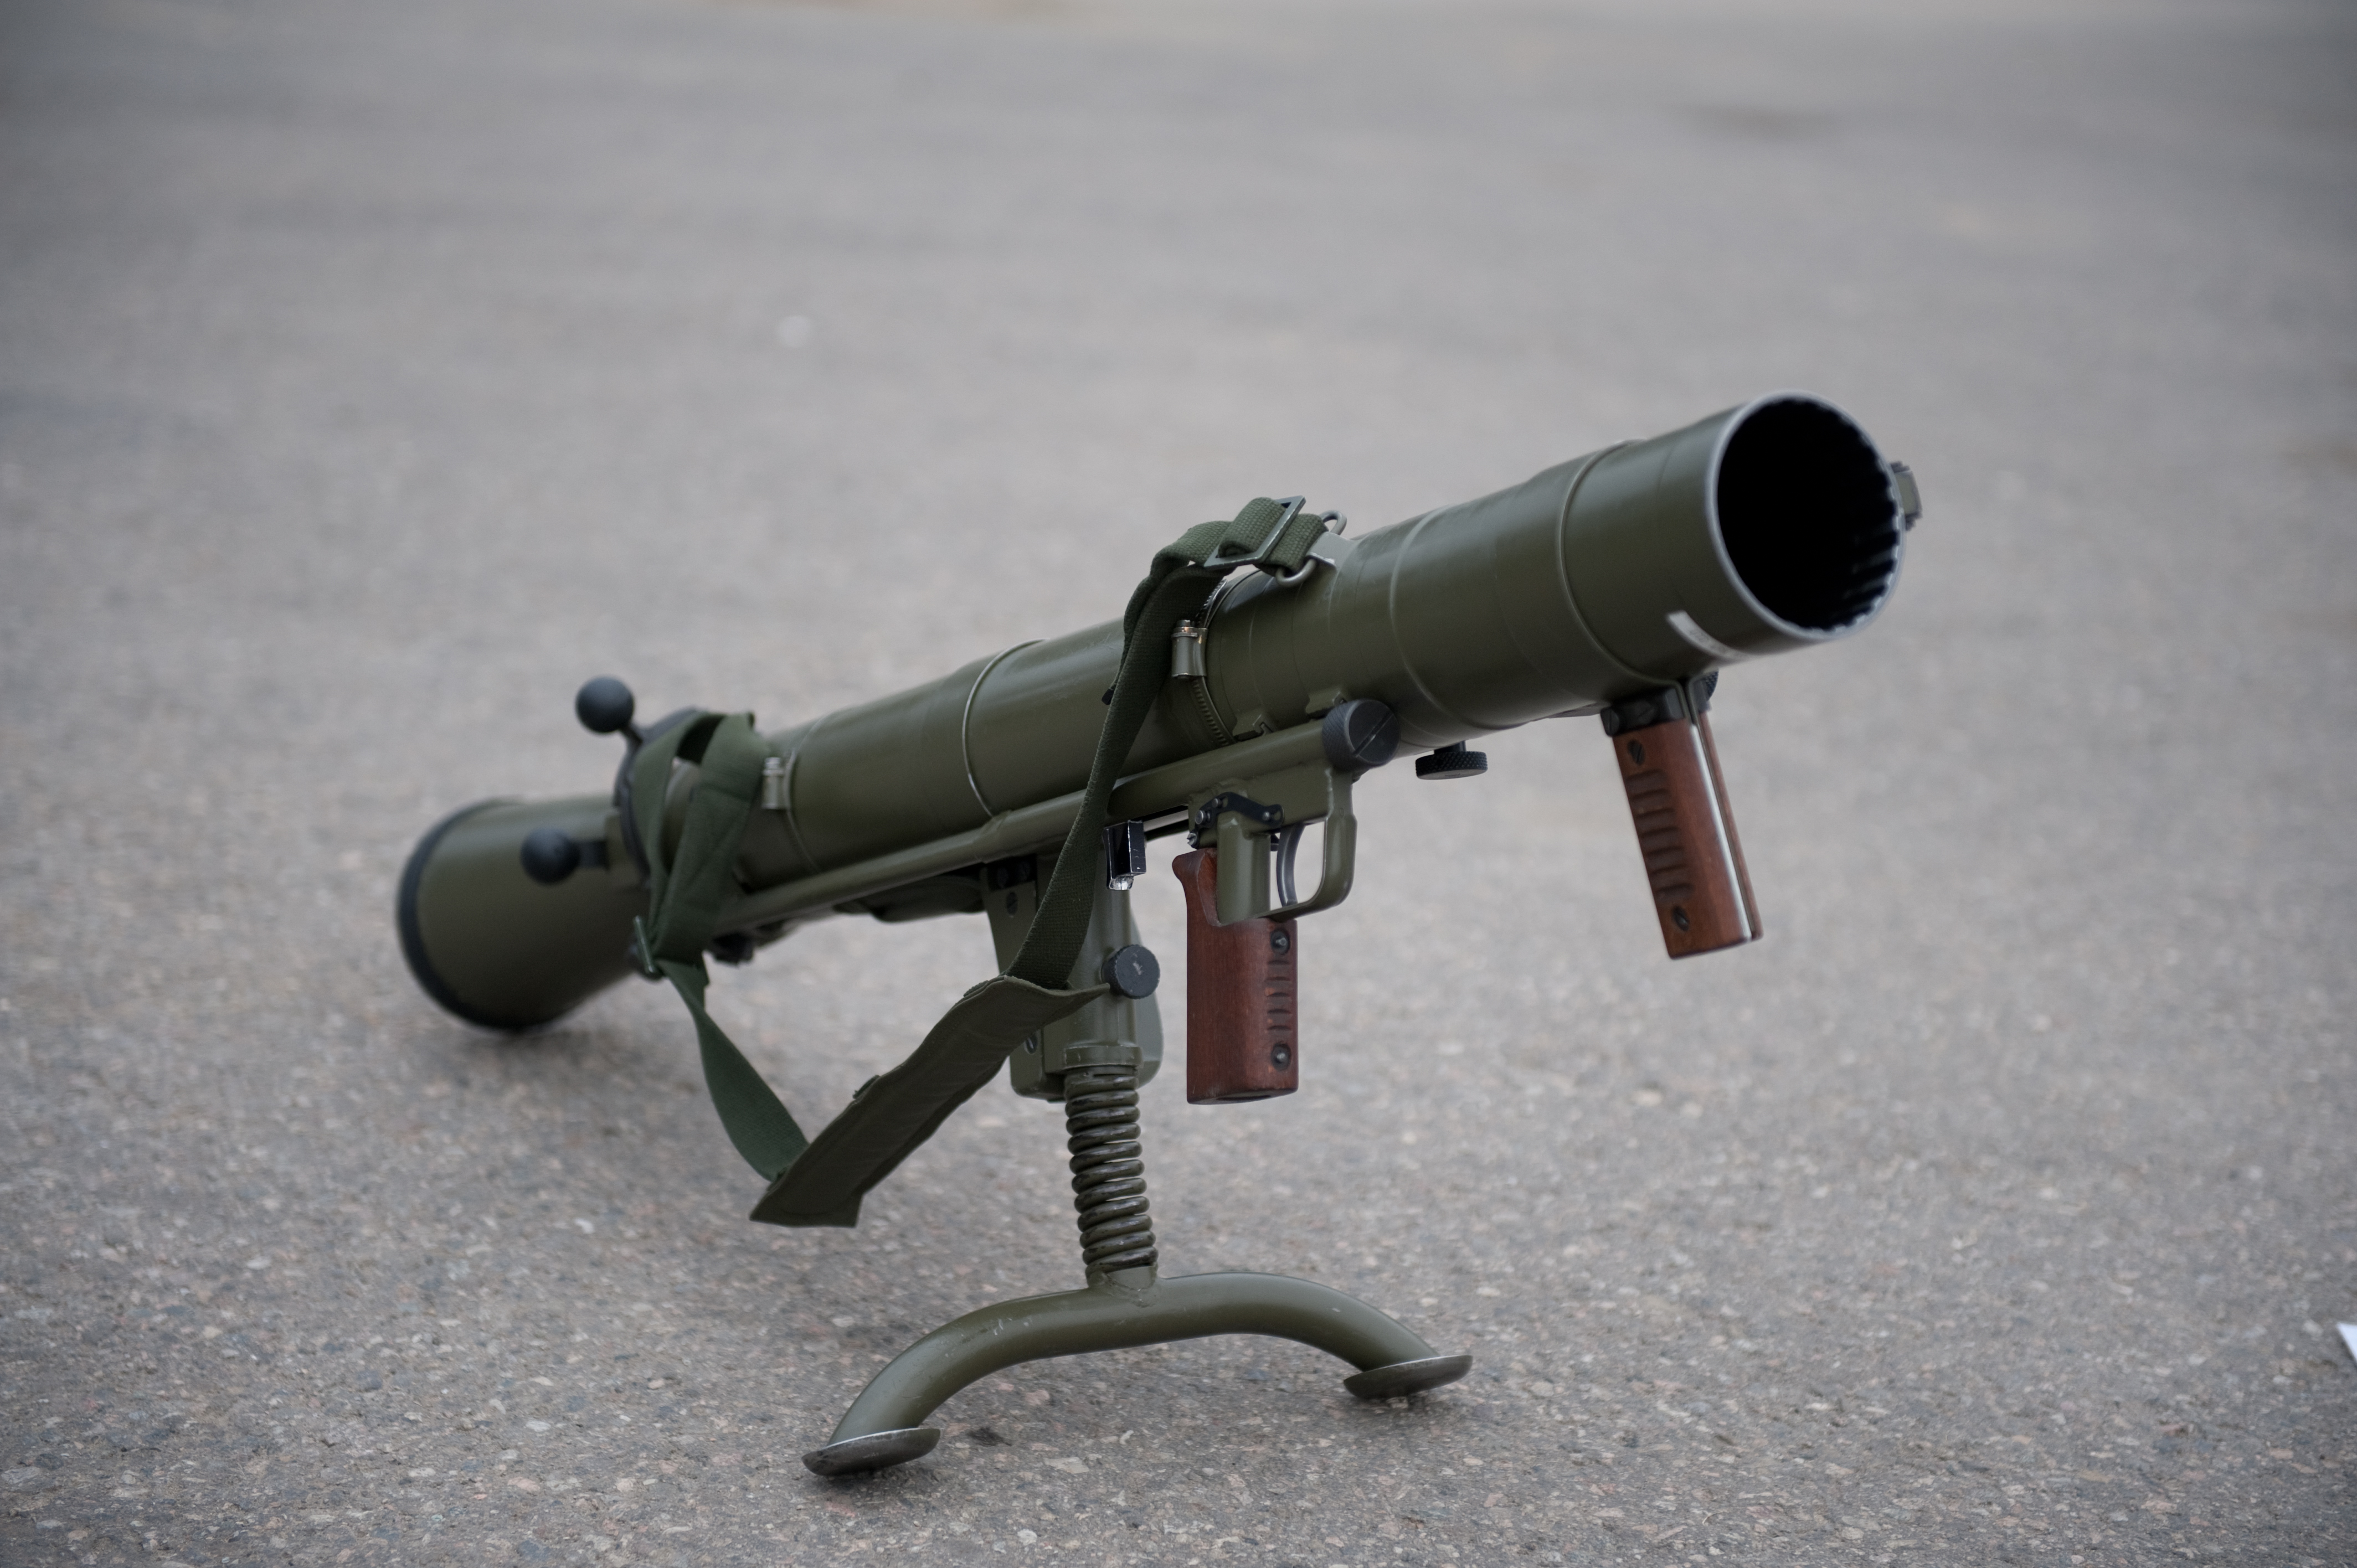 Carl Gustav recoilless rifle